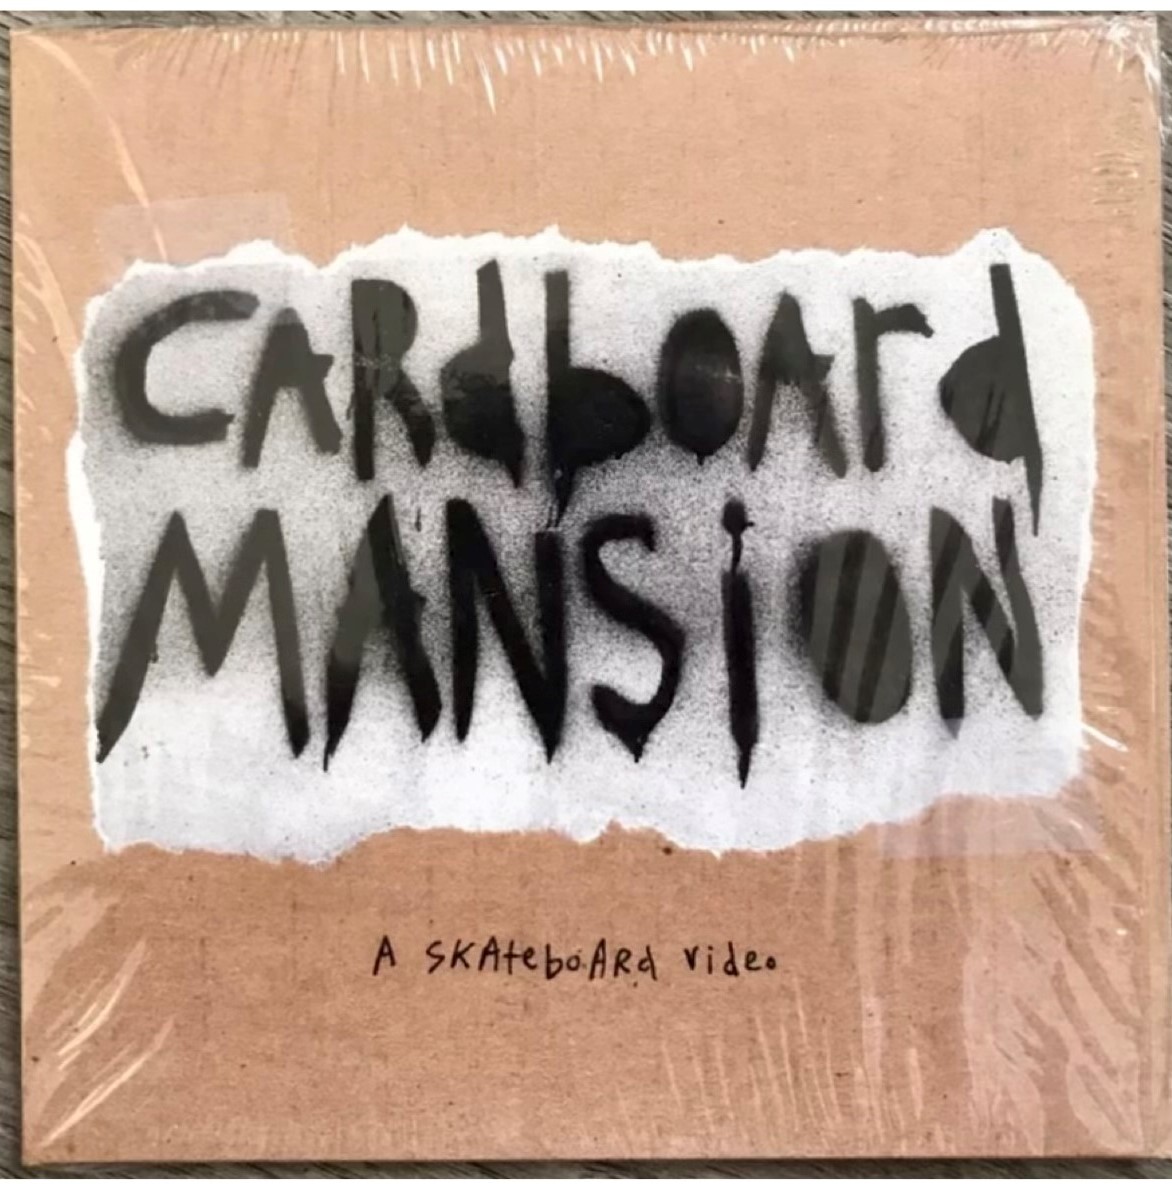 Cardboard Mansion cover